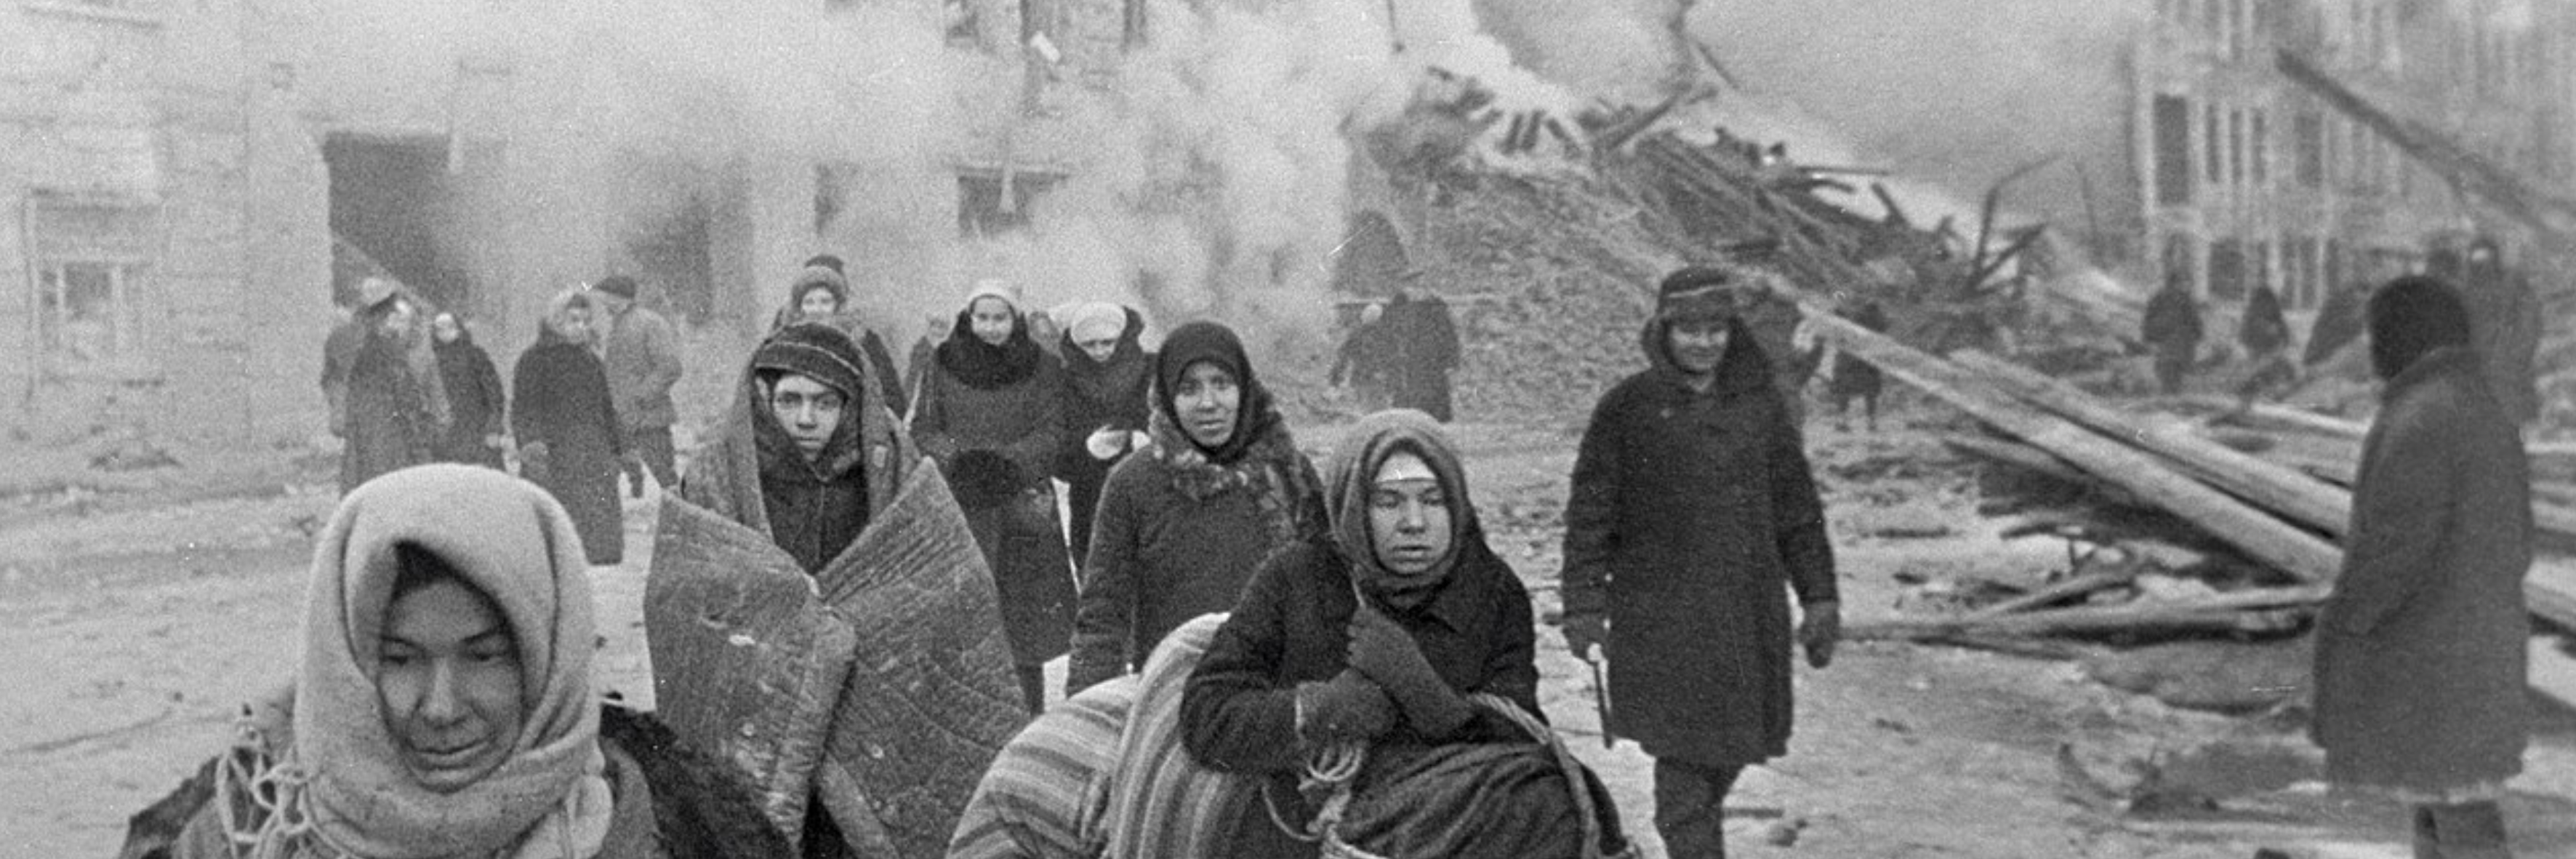 Leningrad: Geplanter Vernichtungskrieg